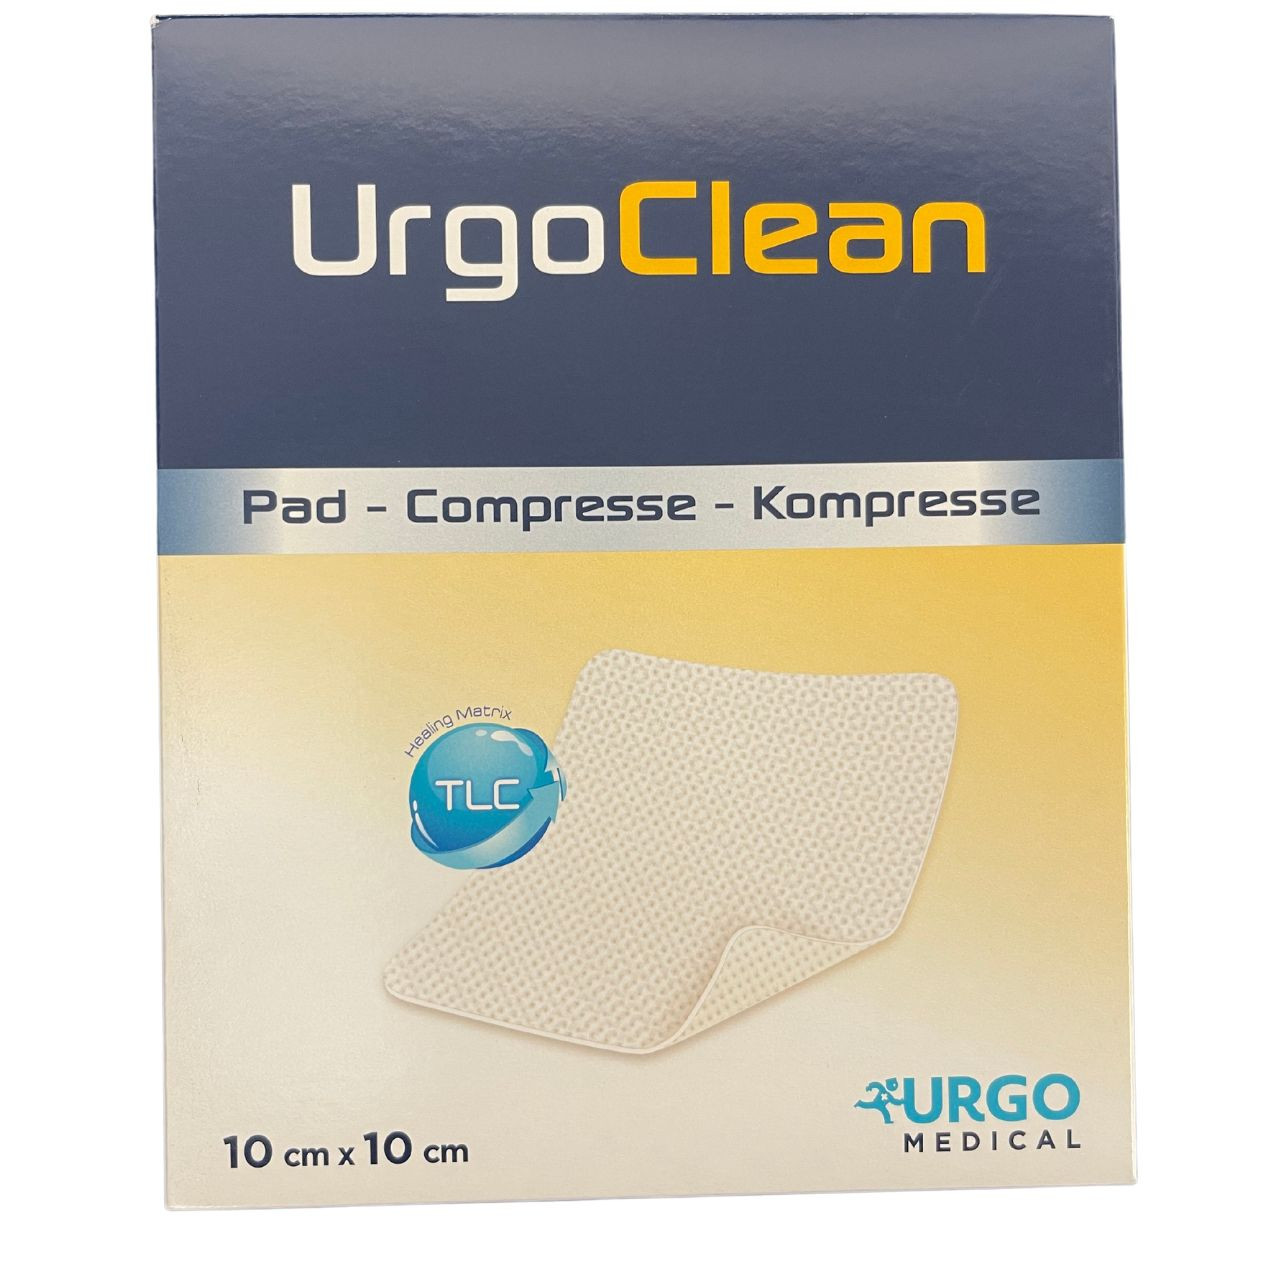 Pharma C  Urgo - Dressing 10cm X 9cm 50's